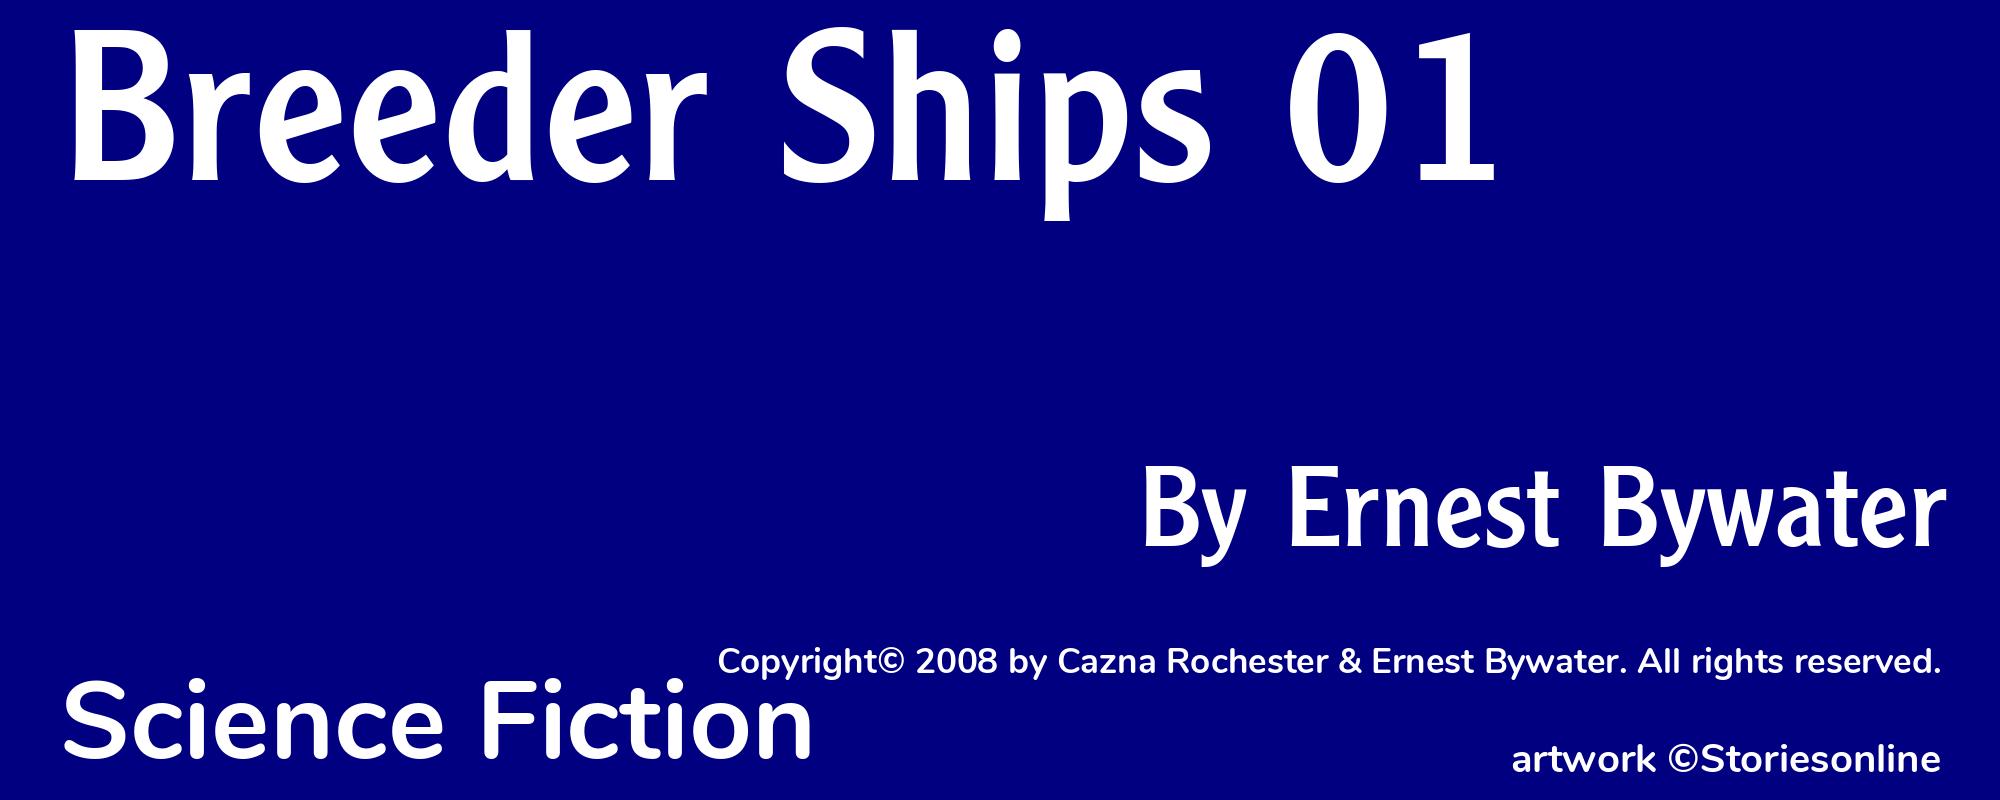 Breeder Ships 01 - Cover